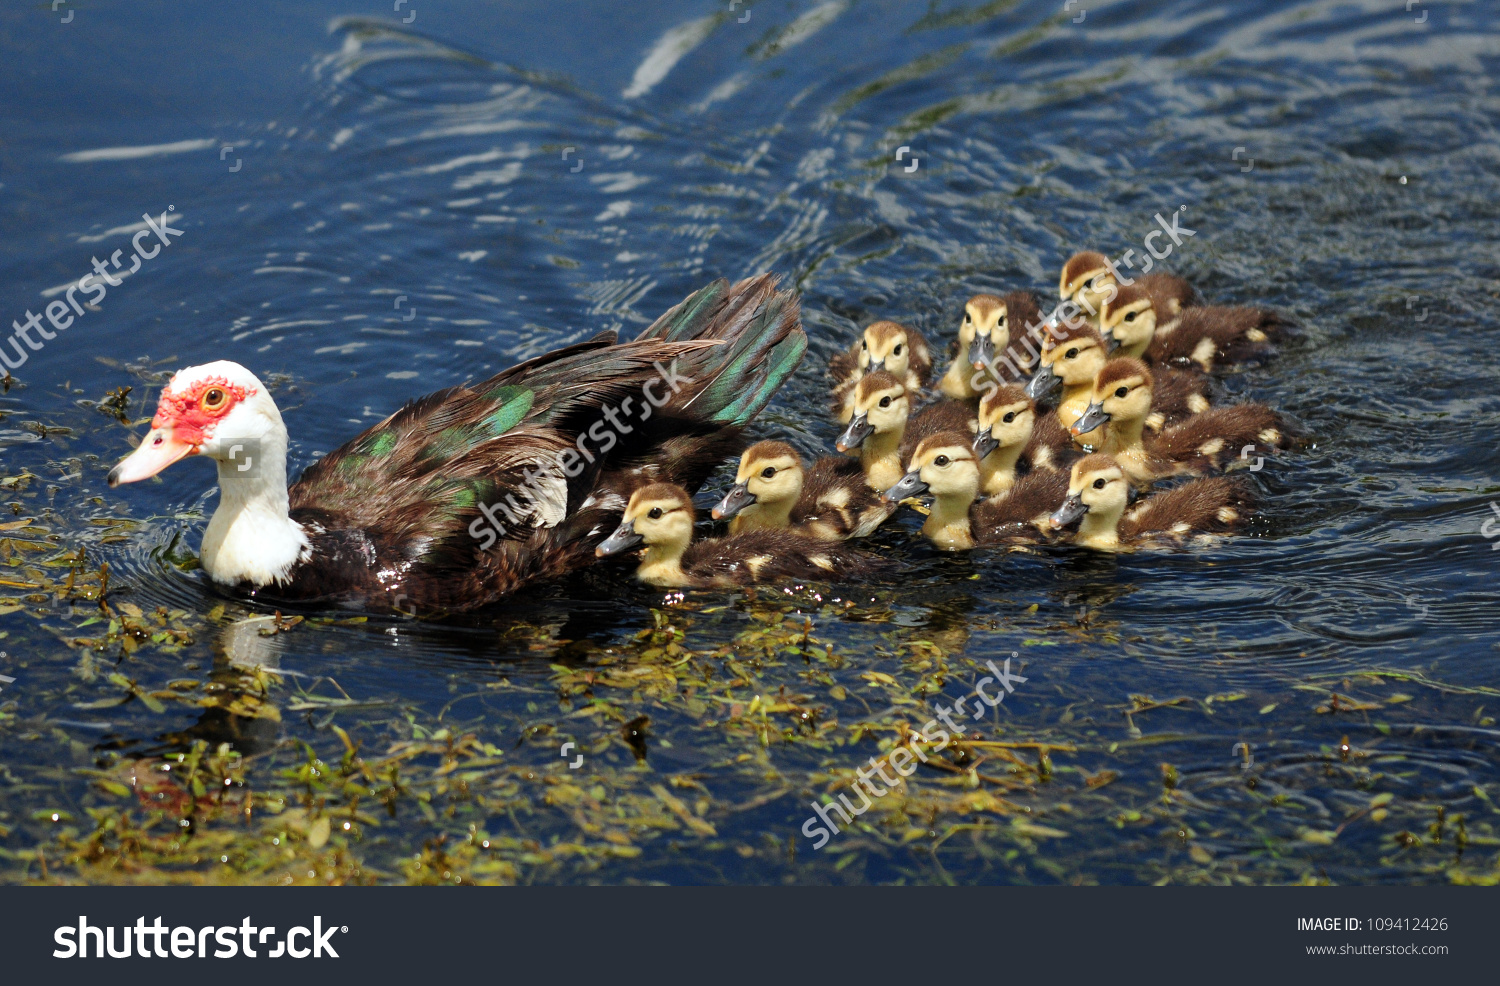 Mother Cute Baby Scobie Ducks Pond Stock Photo 109412426.